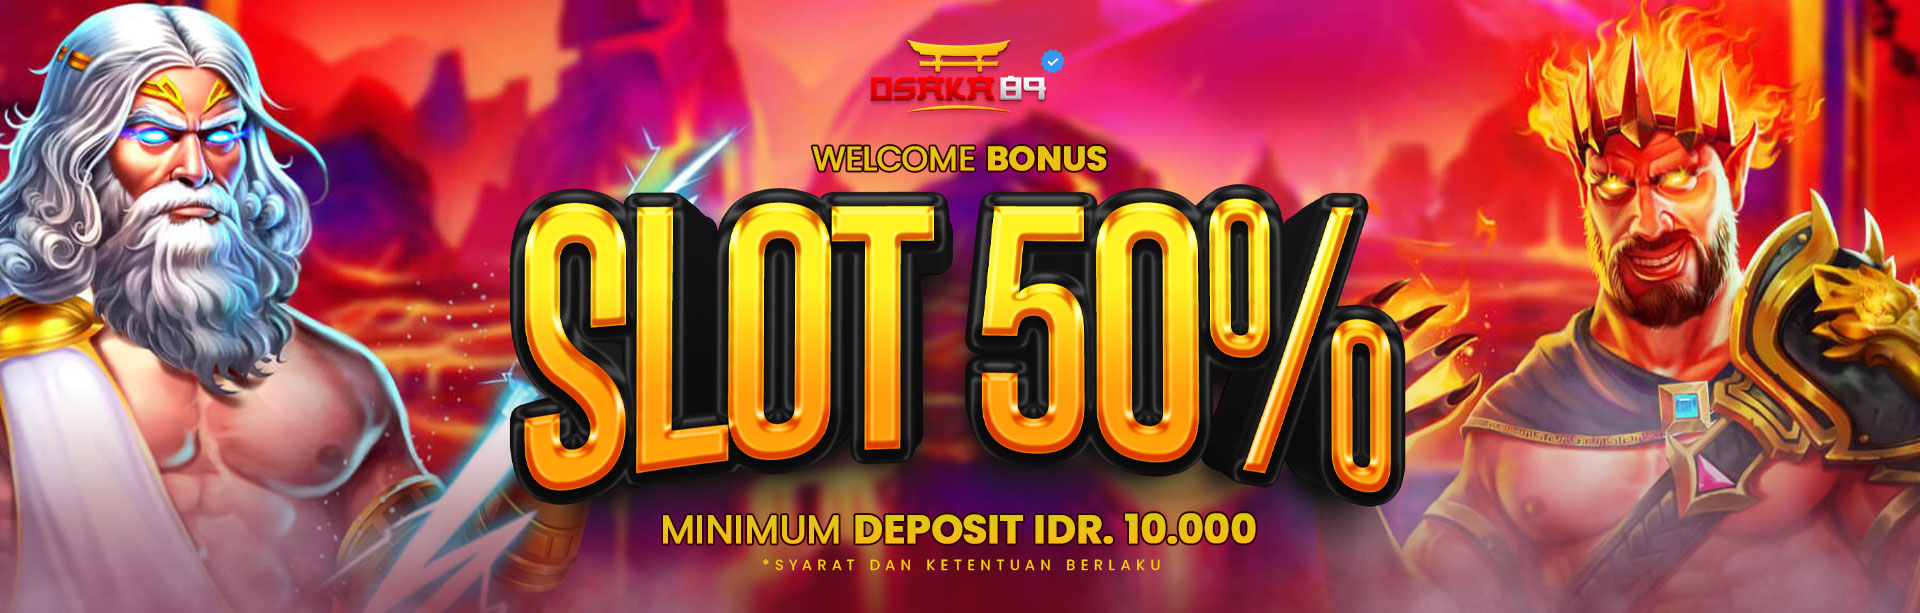 Welcome Bonus Slot 50% !!!